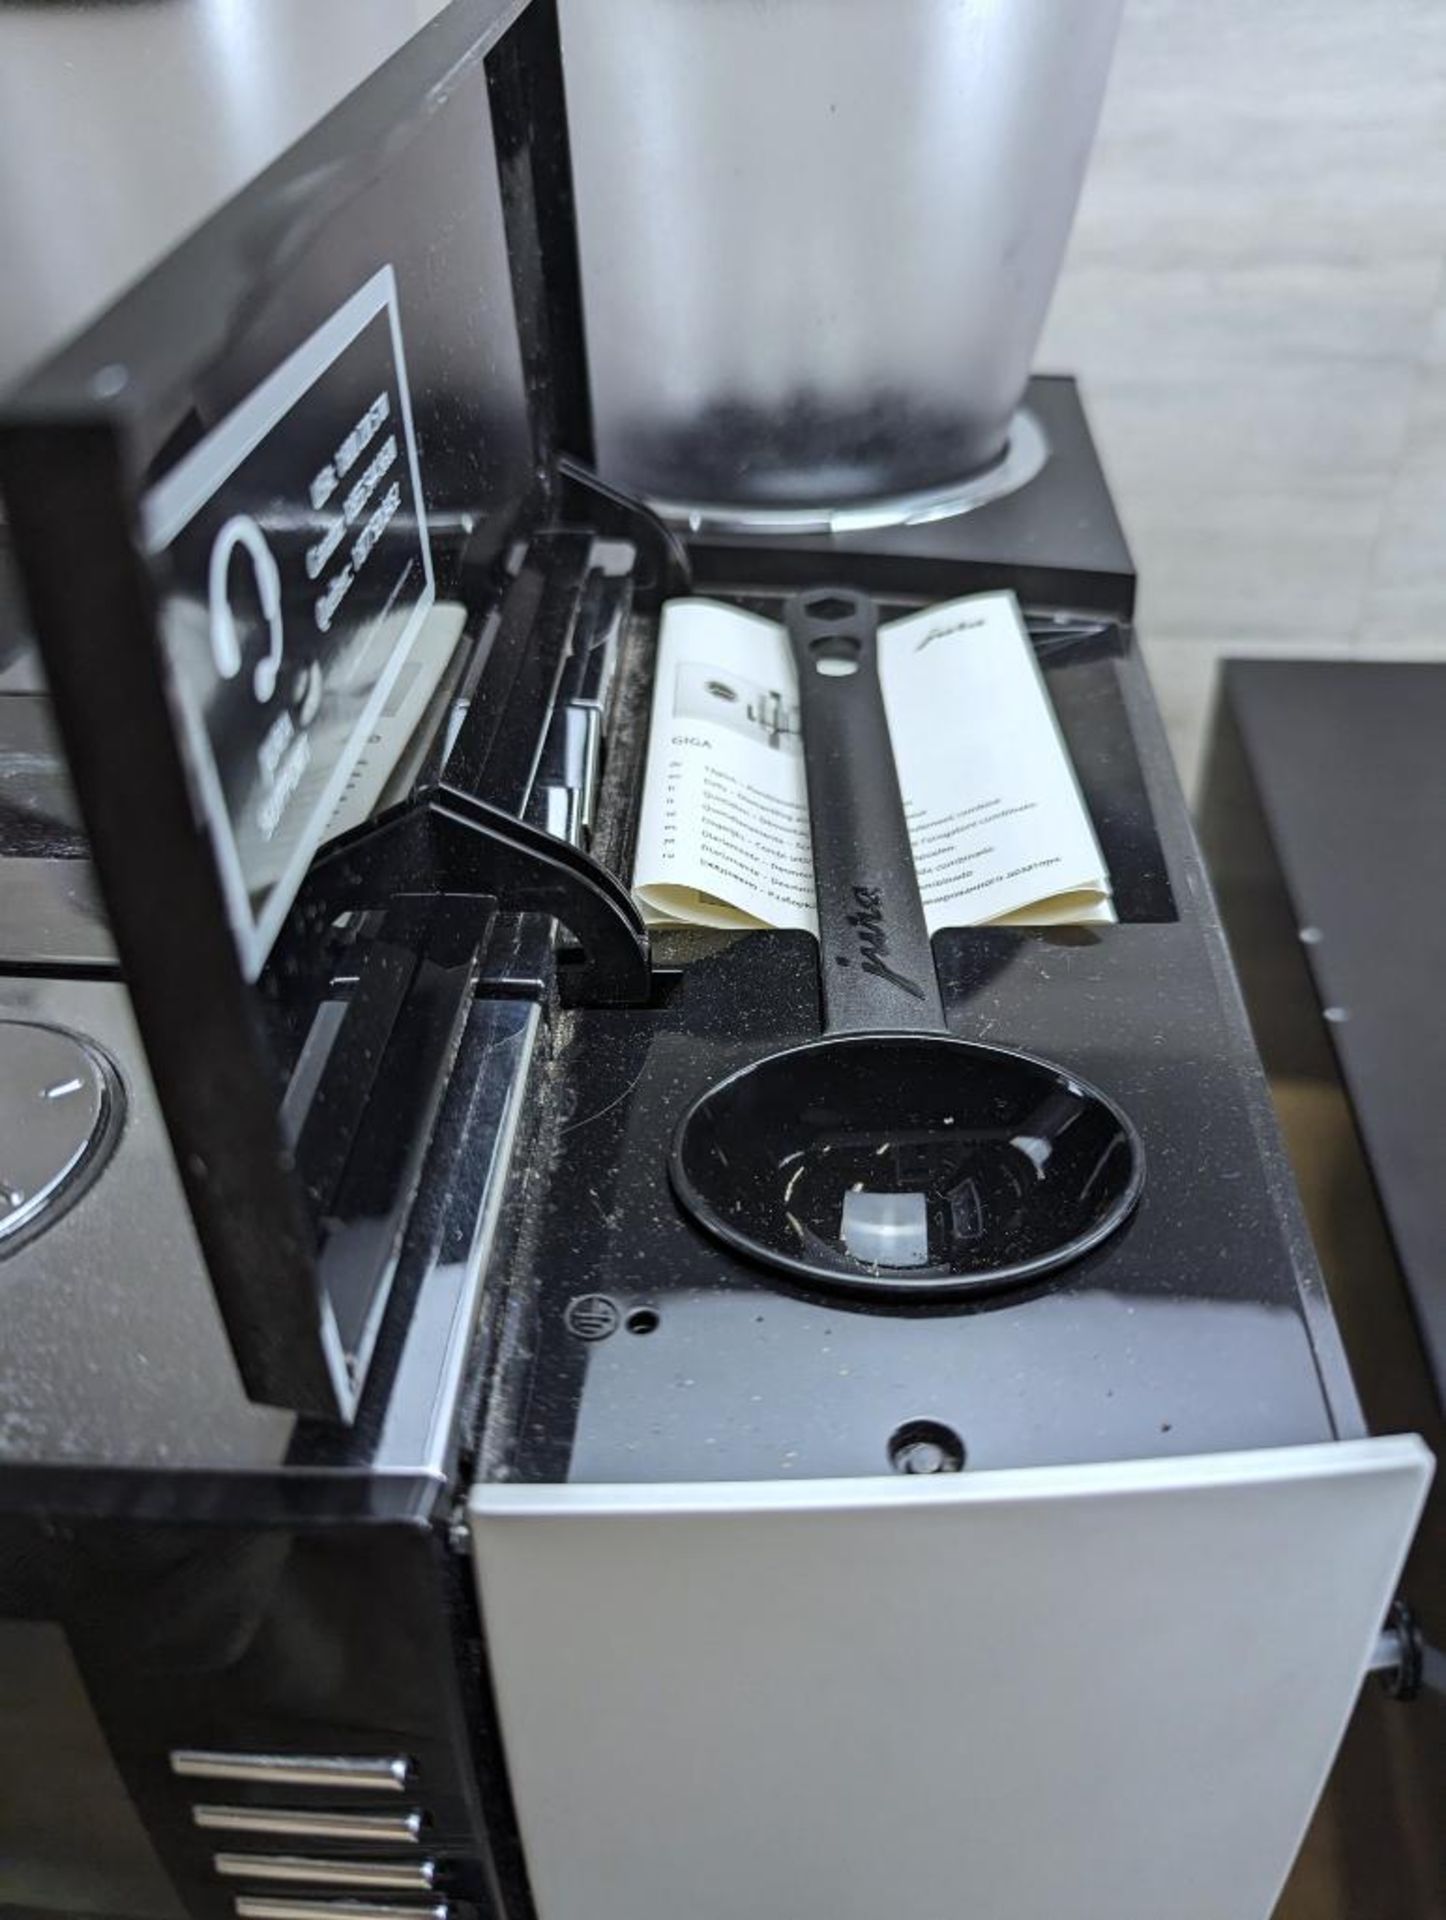 JURA GIGA X7 PROFESSIONAL AUTOMATIC COFFEE MACHINE WITH MILK COOLER - Image 5 of 16